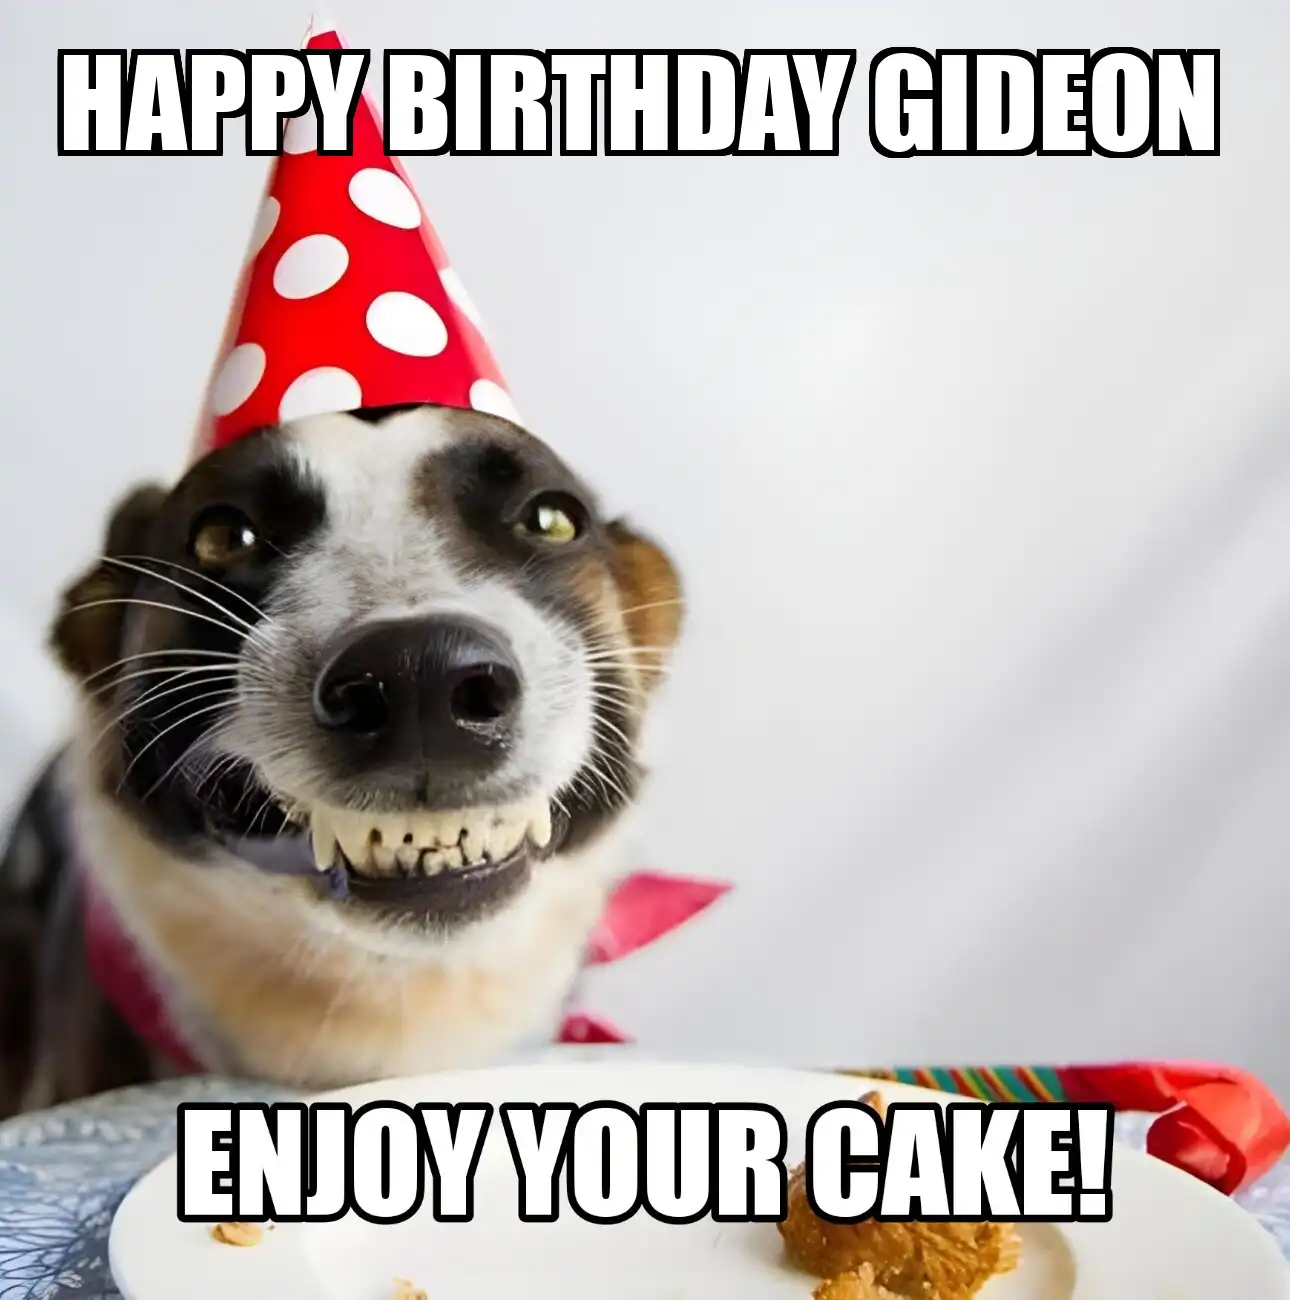 Happy Birthday Gideon Enjoy Your Cake Dog Meme